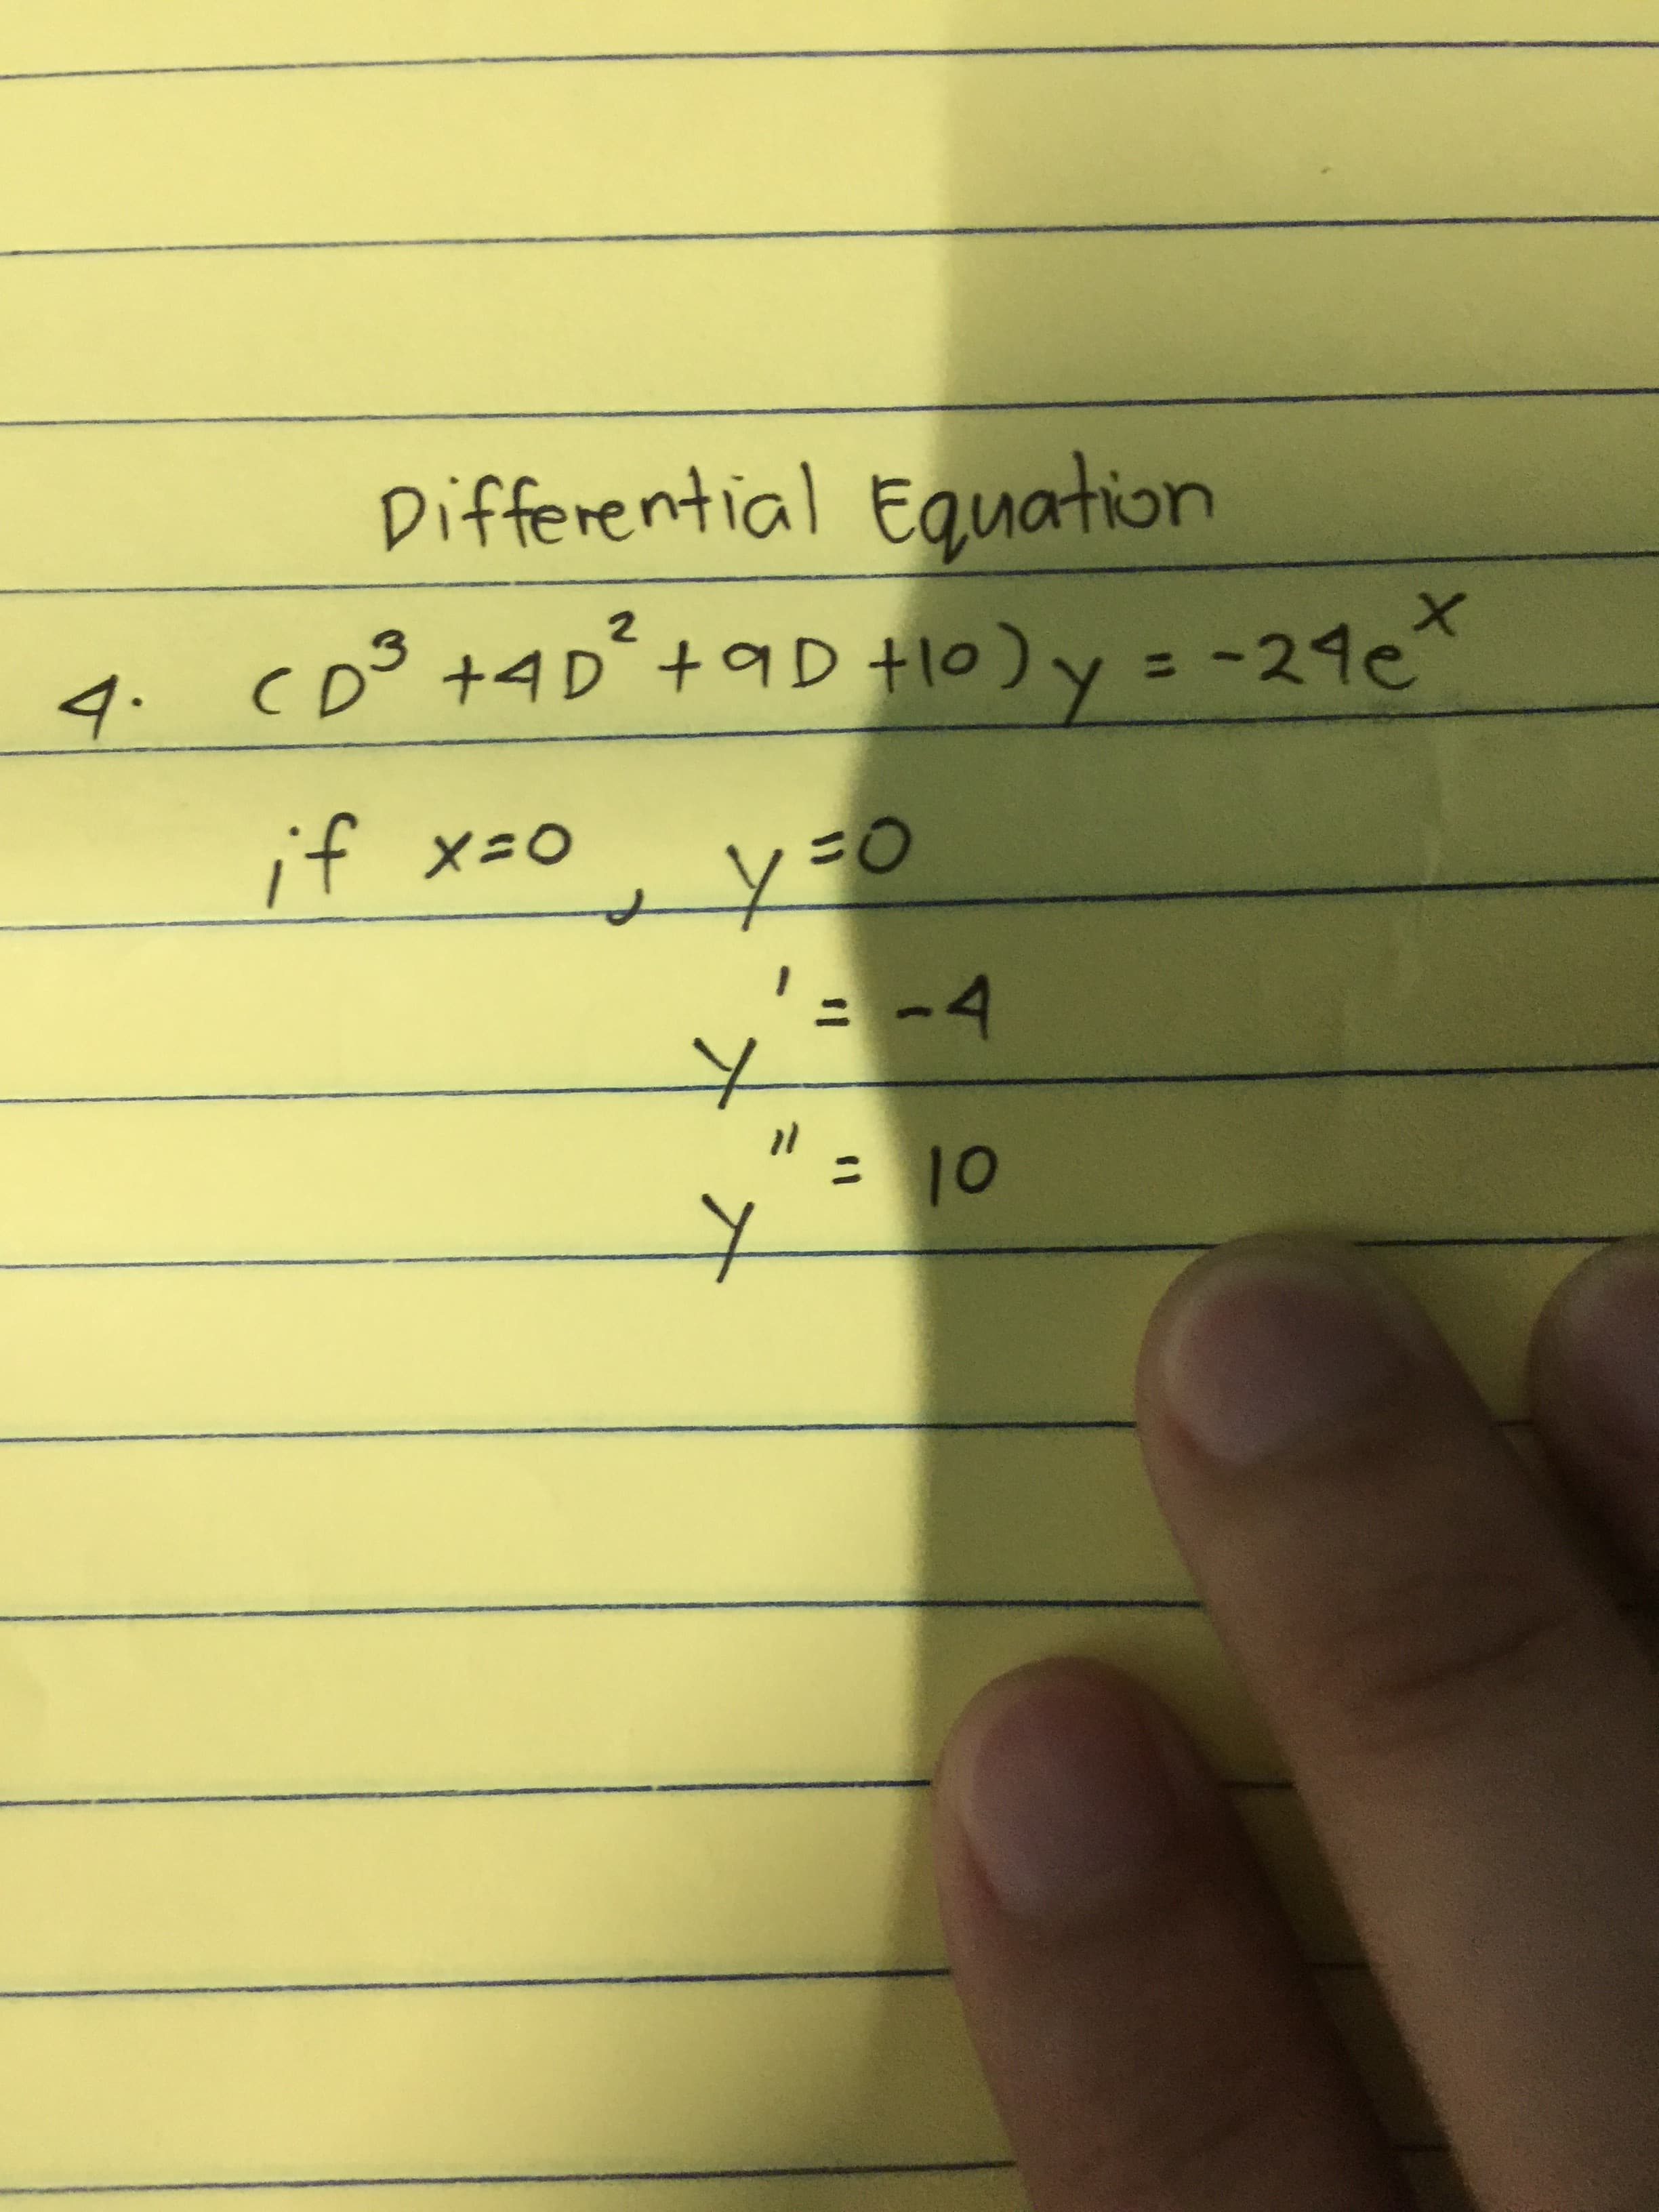 Differential Equation
2
-24e
CD +4D +9D tlo)
4.
O
fx-0
' -4
10
ol
